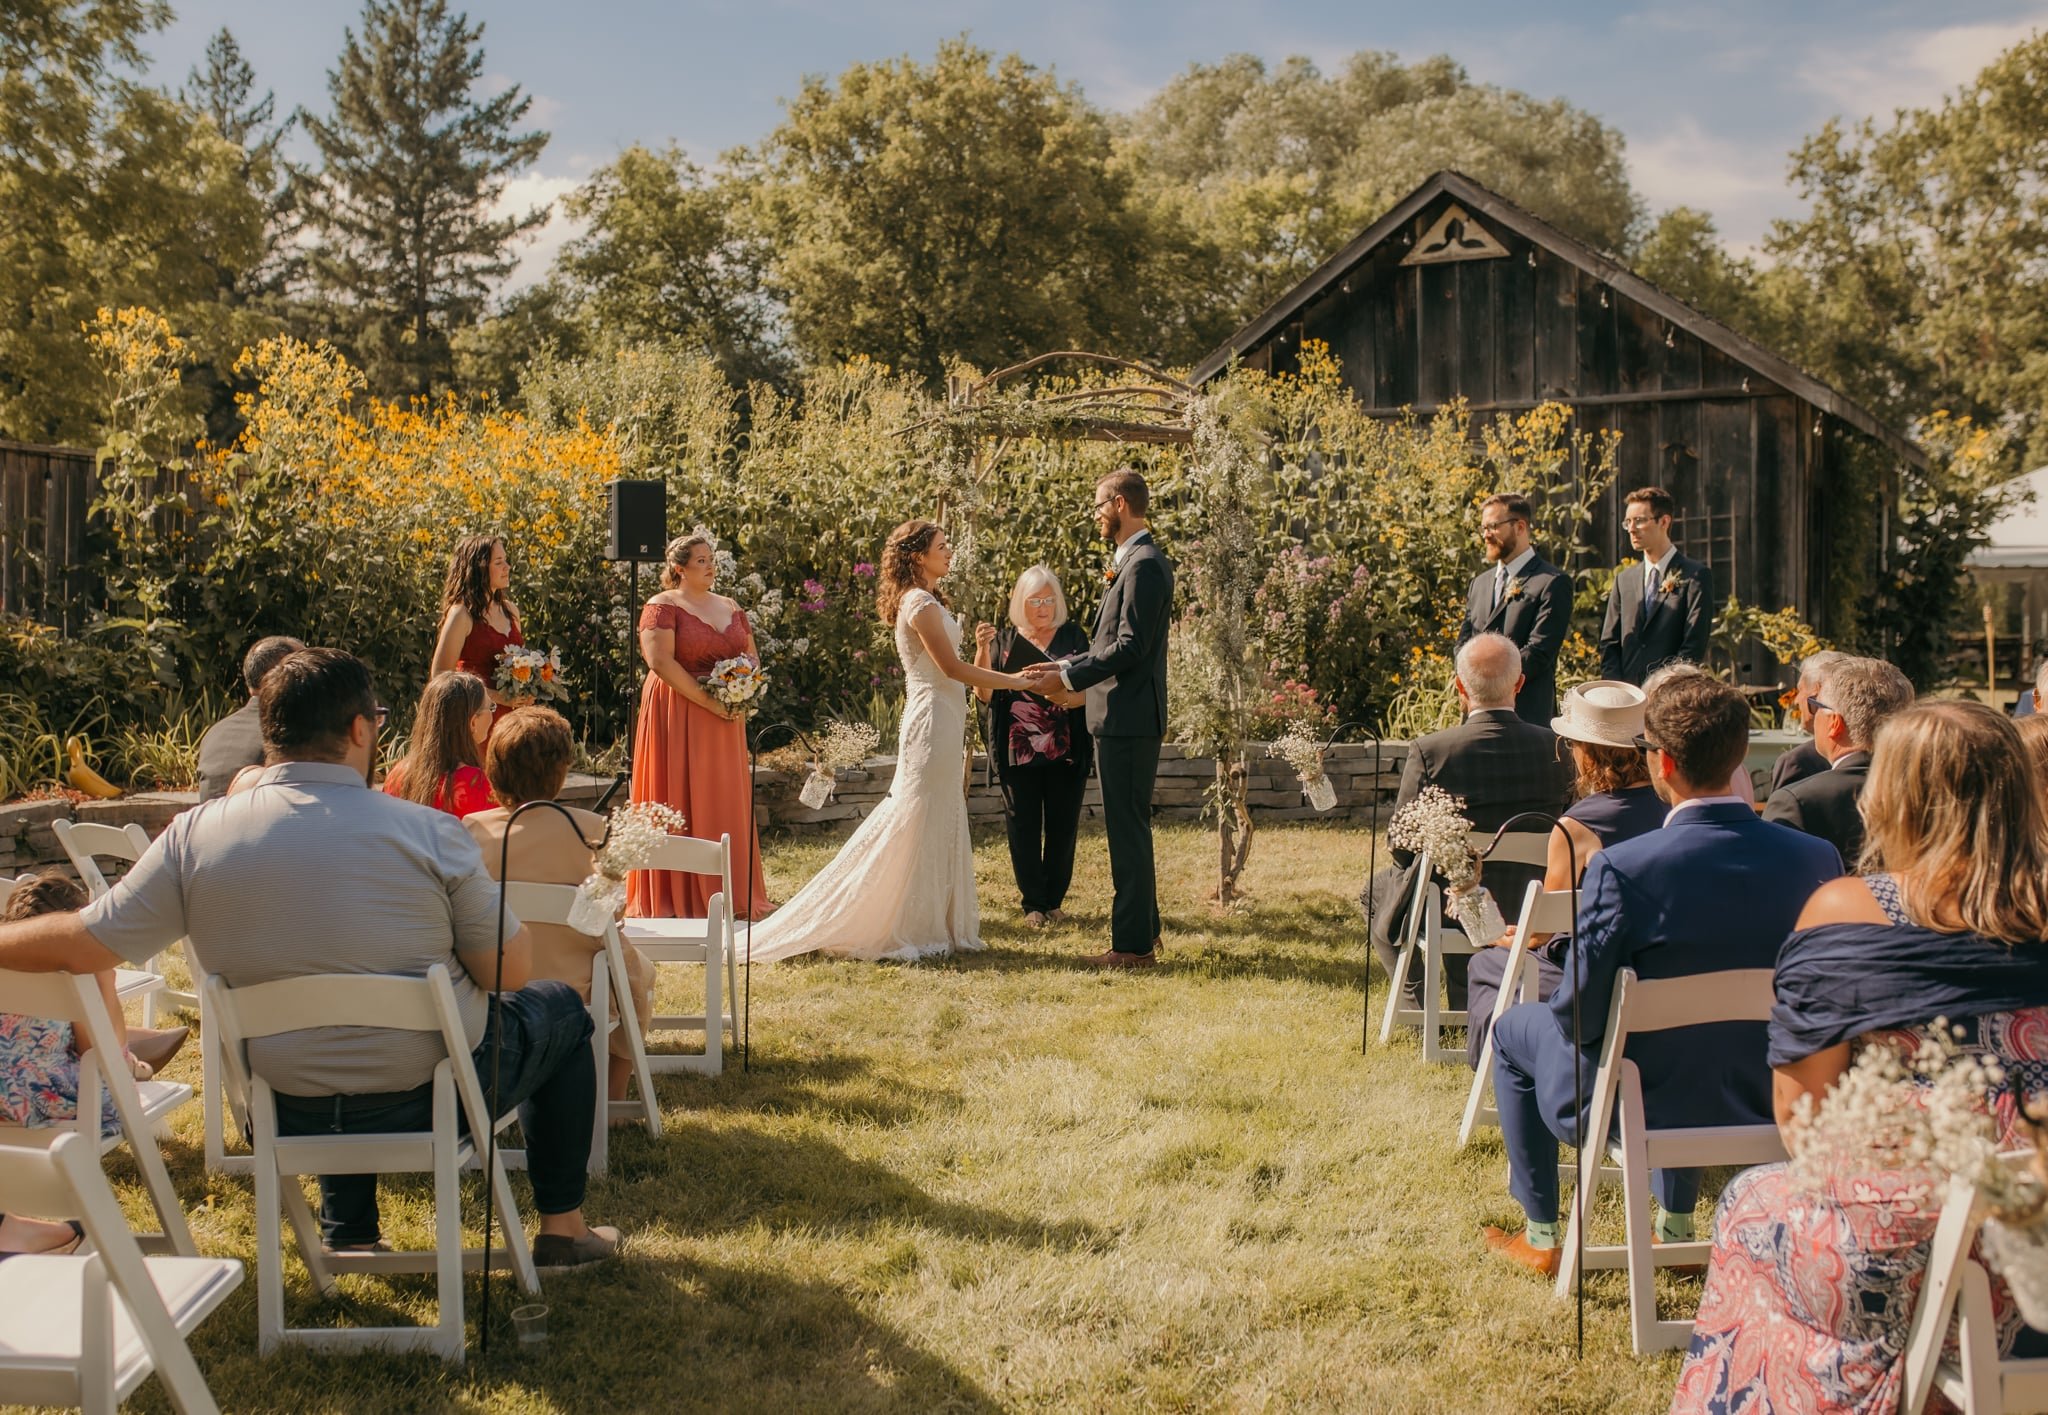 Backyard wedding ceremony in Ontario